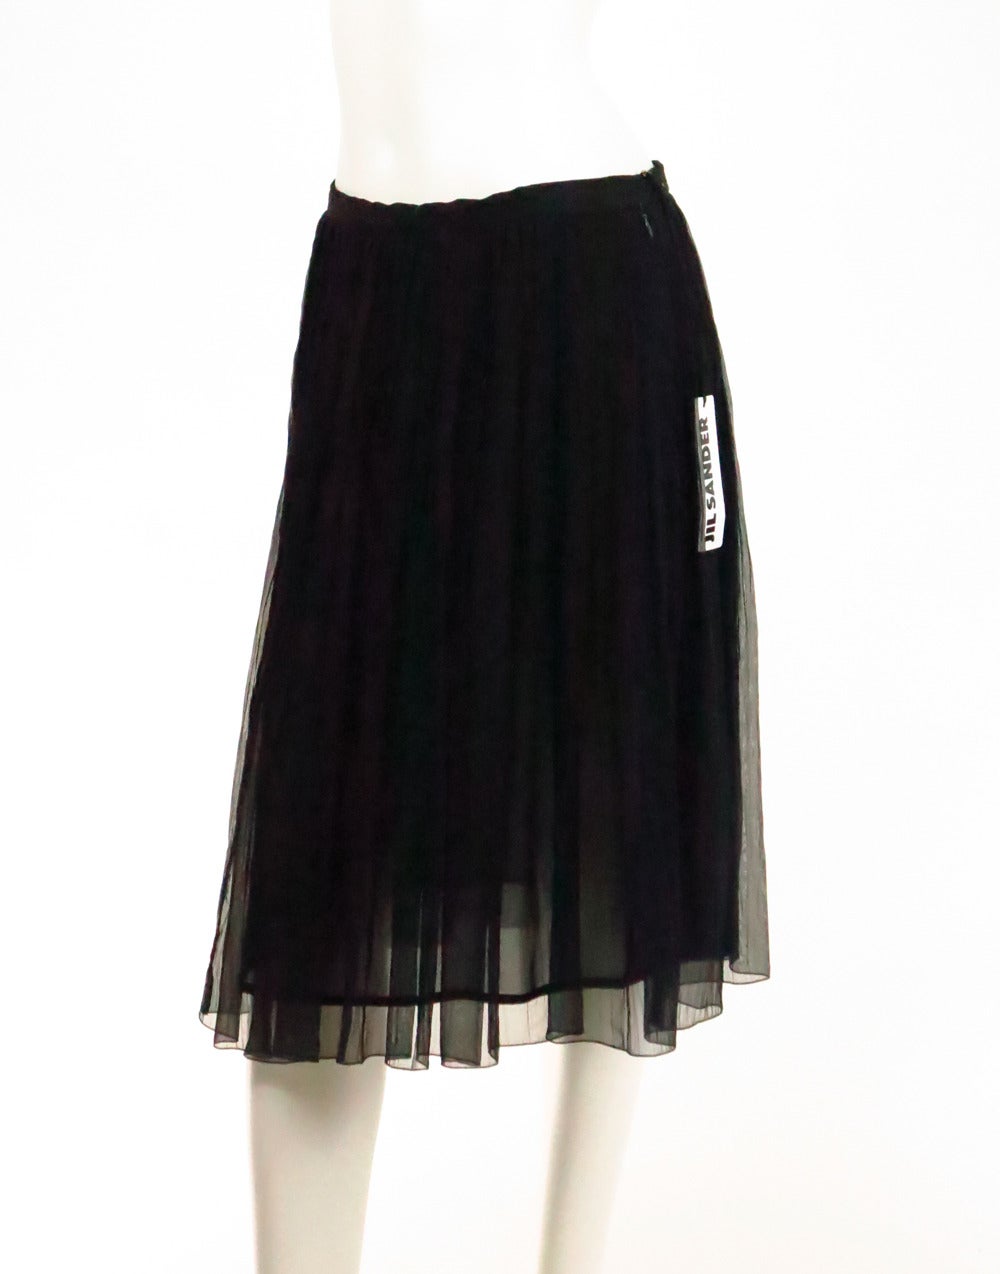 Jil sander black silk chiffon open pleated skirt...Sheer silk chiffon skirt has a waist band,  zipper closure with hooks at waist...Silk underling...New with tags...Marked size 42...

Measurements are:
Waist 31